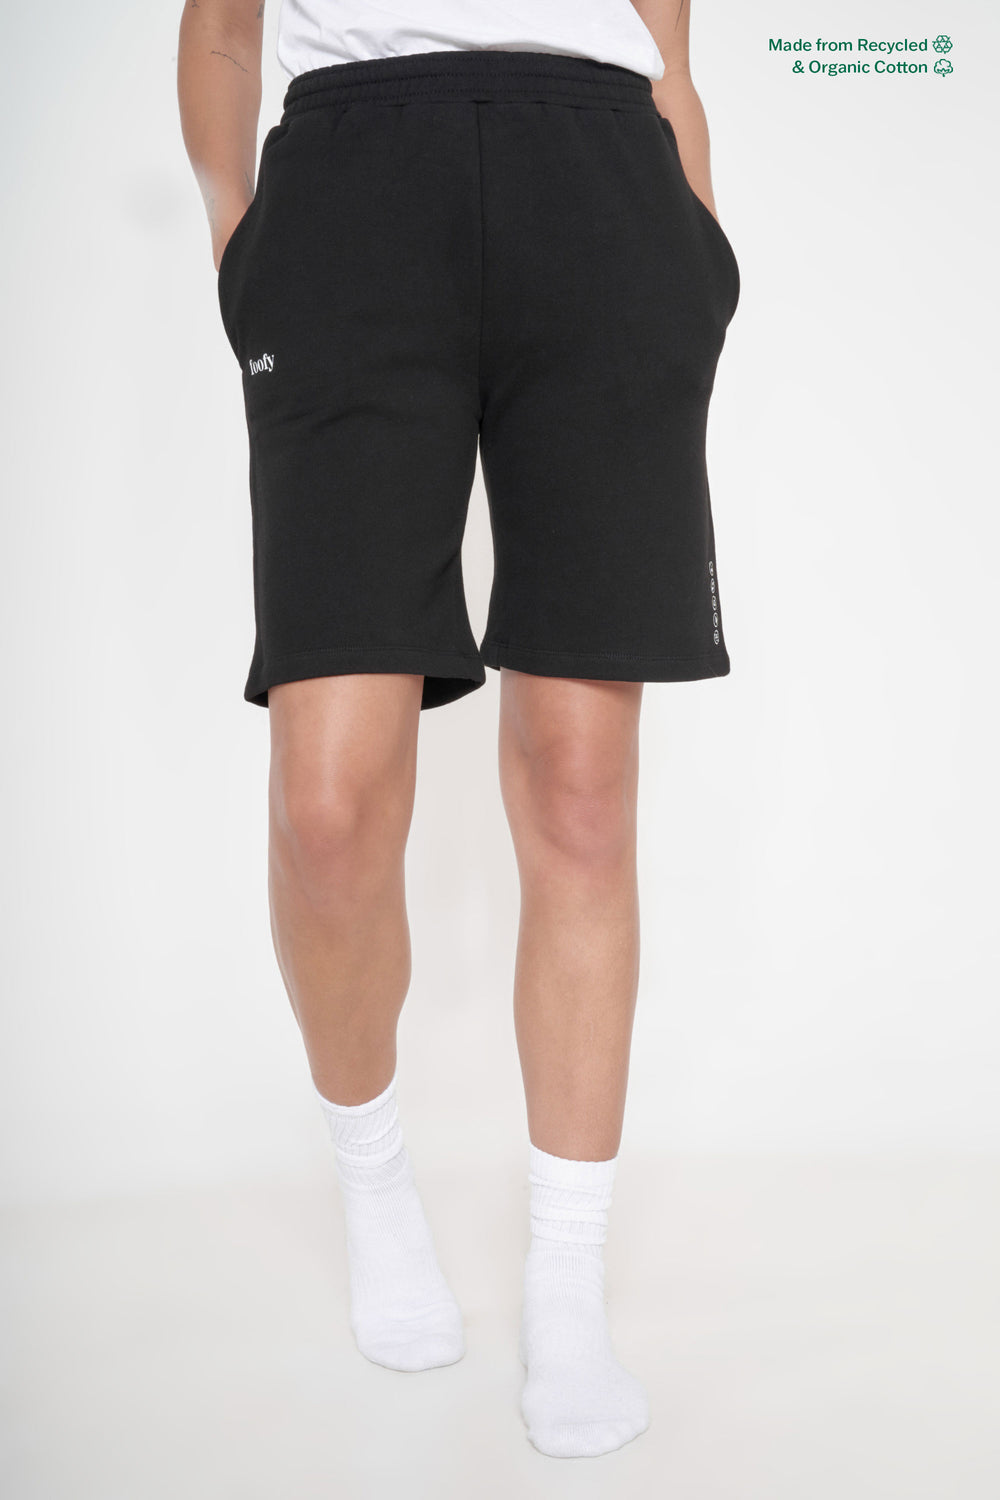 Foofy Black Long Shorts